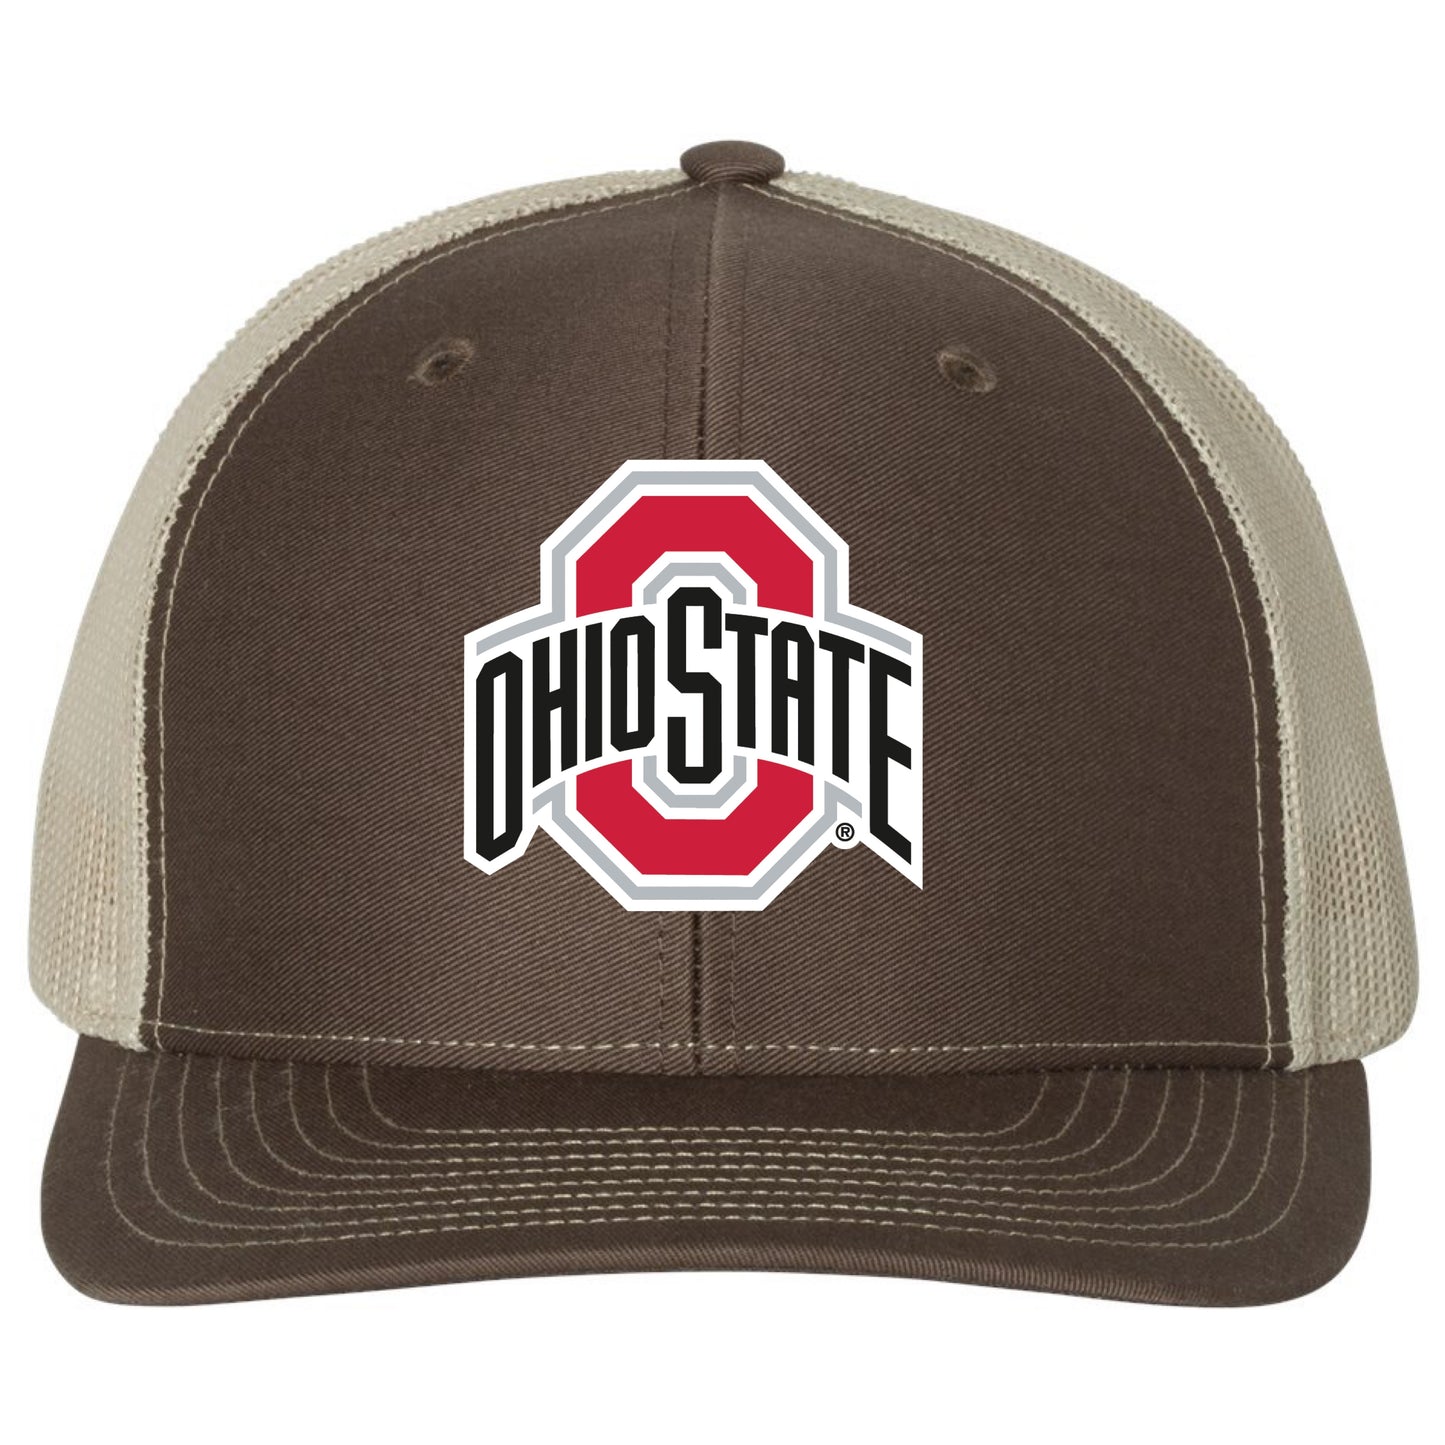 Ohio State Buckeyes 3D YP Snapback Trucker Hat- Brown/ Khaki - Ten Gallon Hat Co.